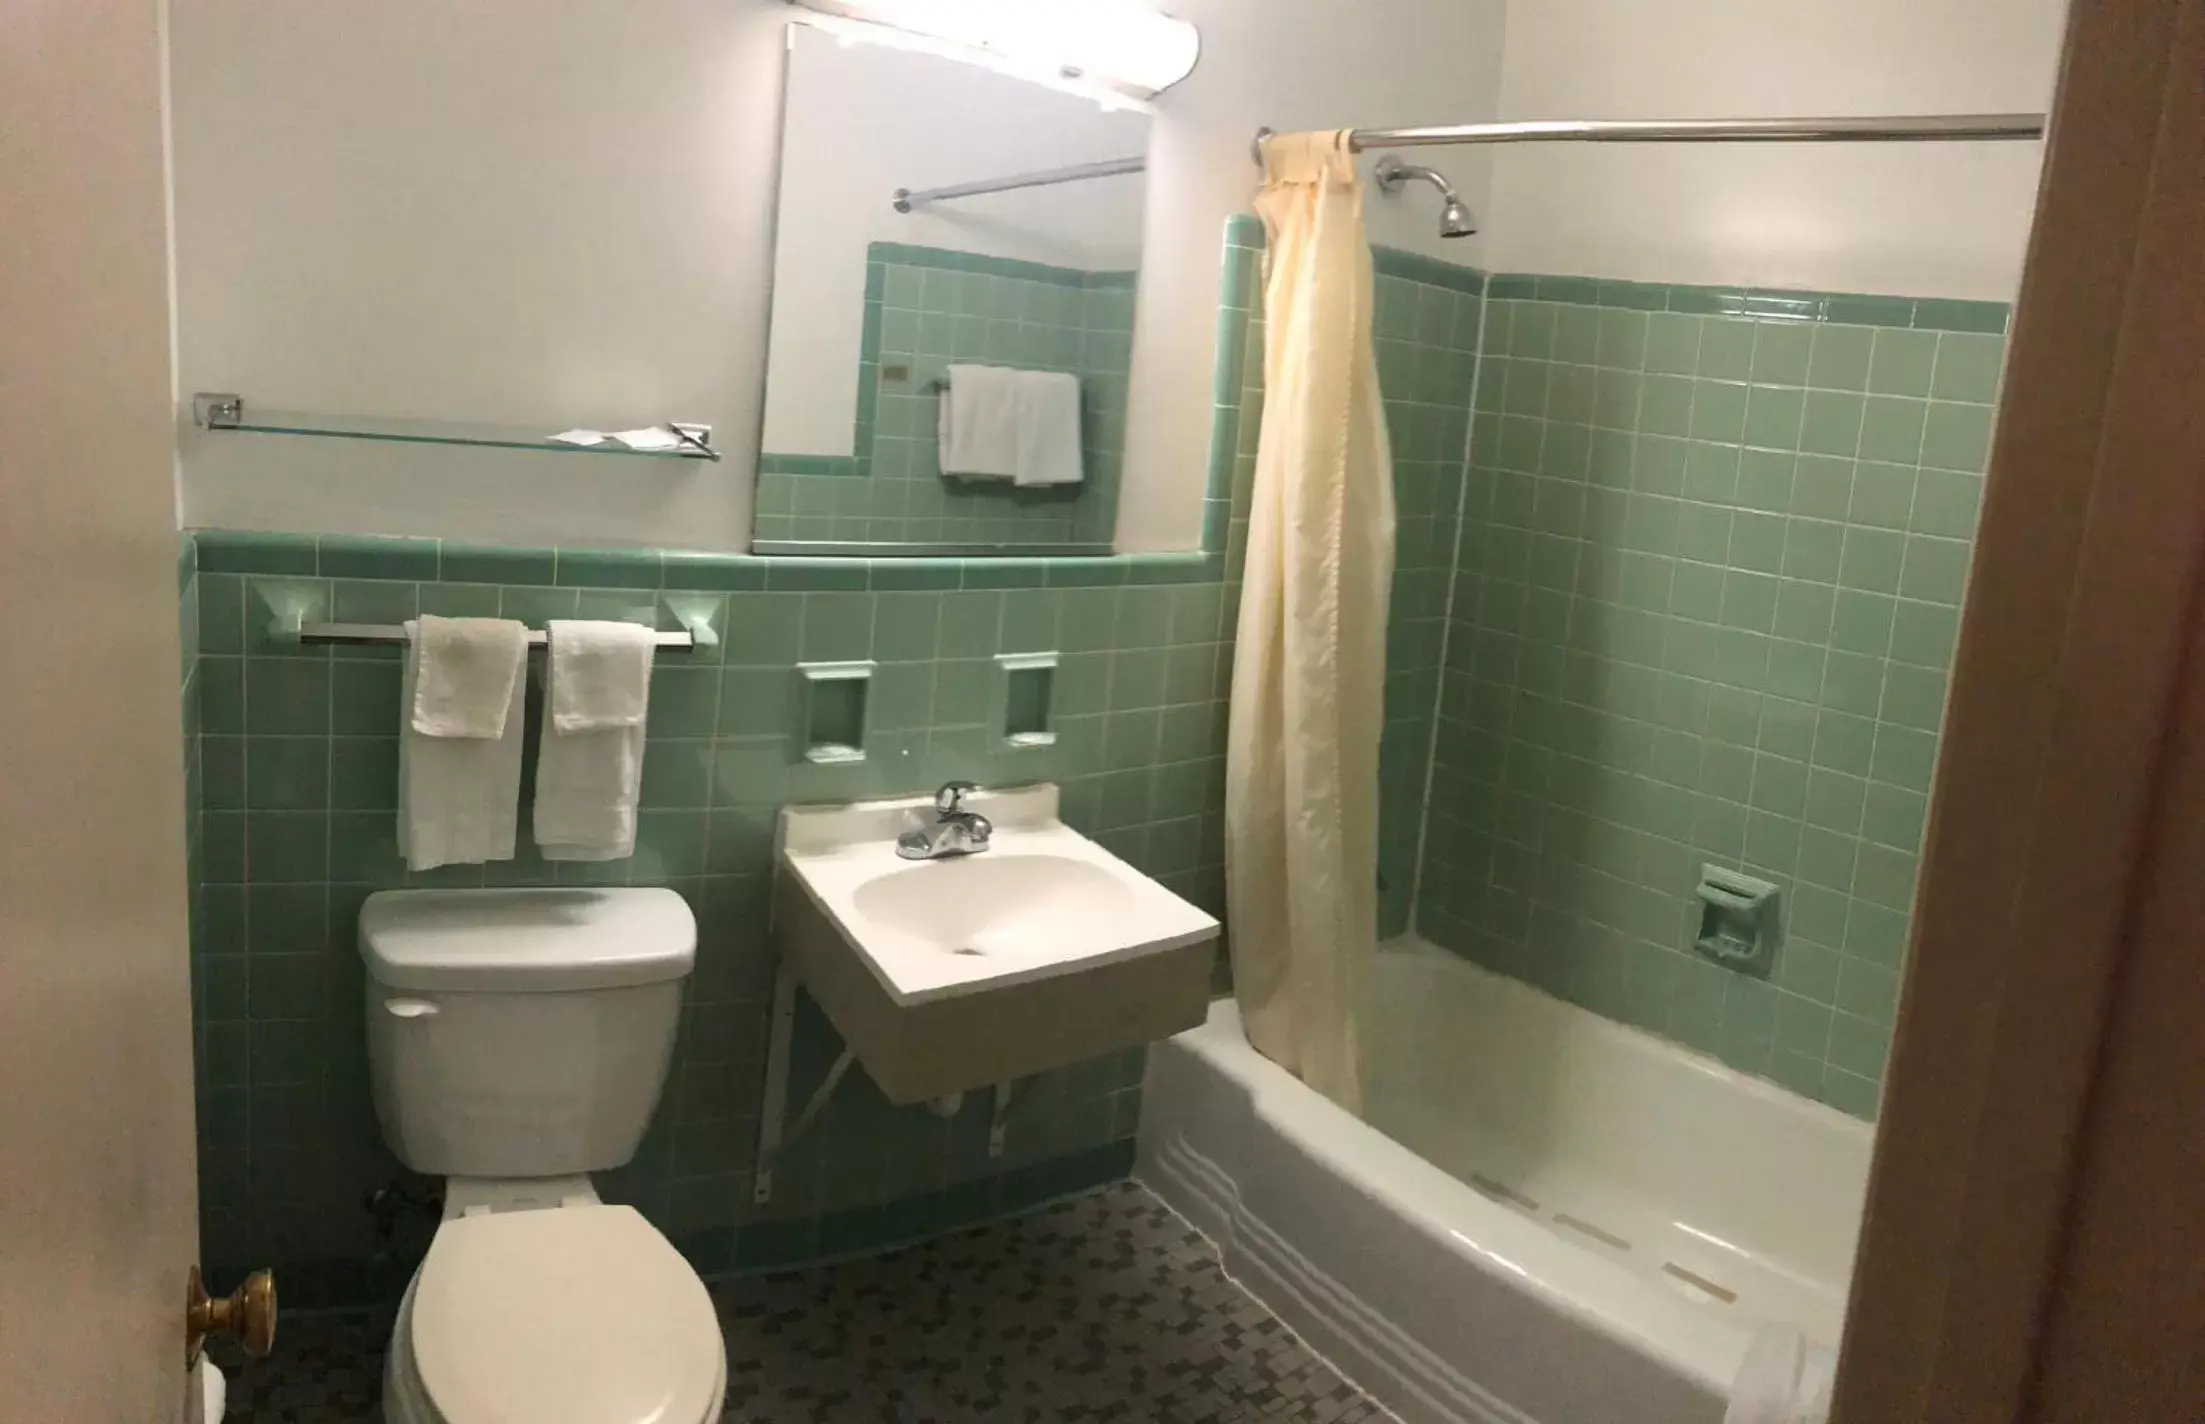 Bathroom in Budget Inn Clearfield PA